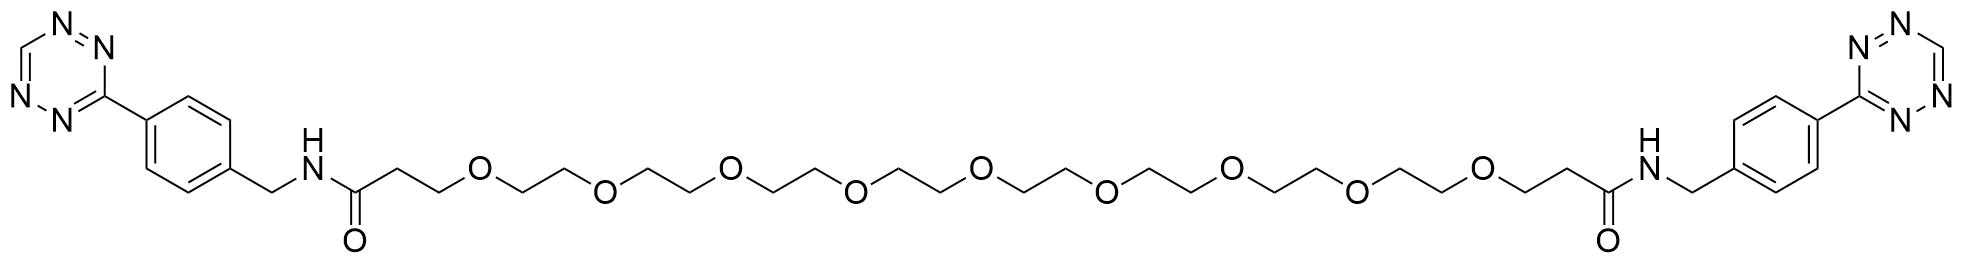 Tetrazine-PEG9-tetrazine